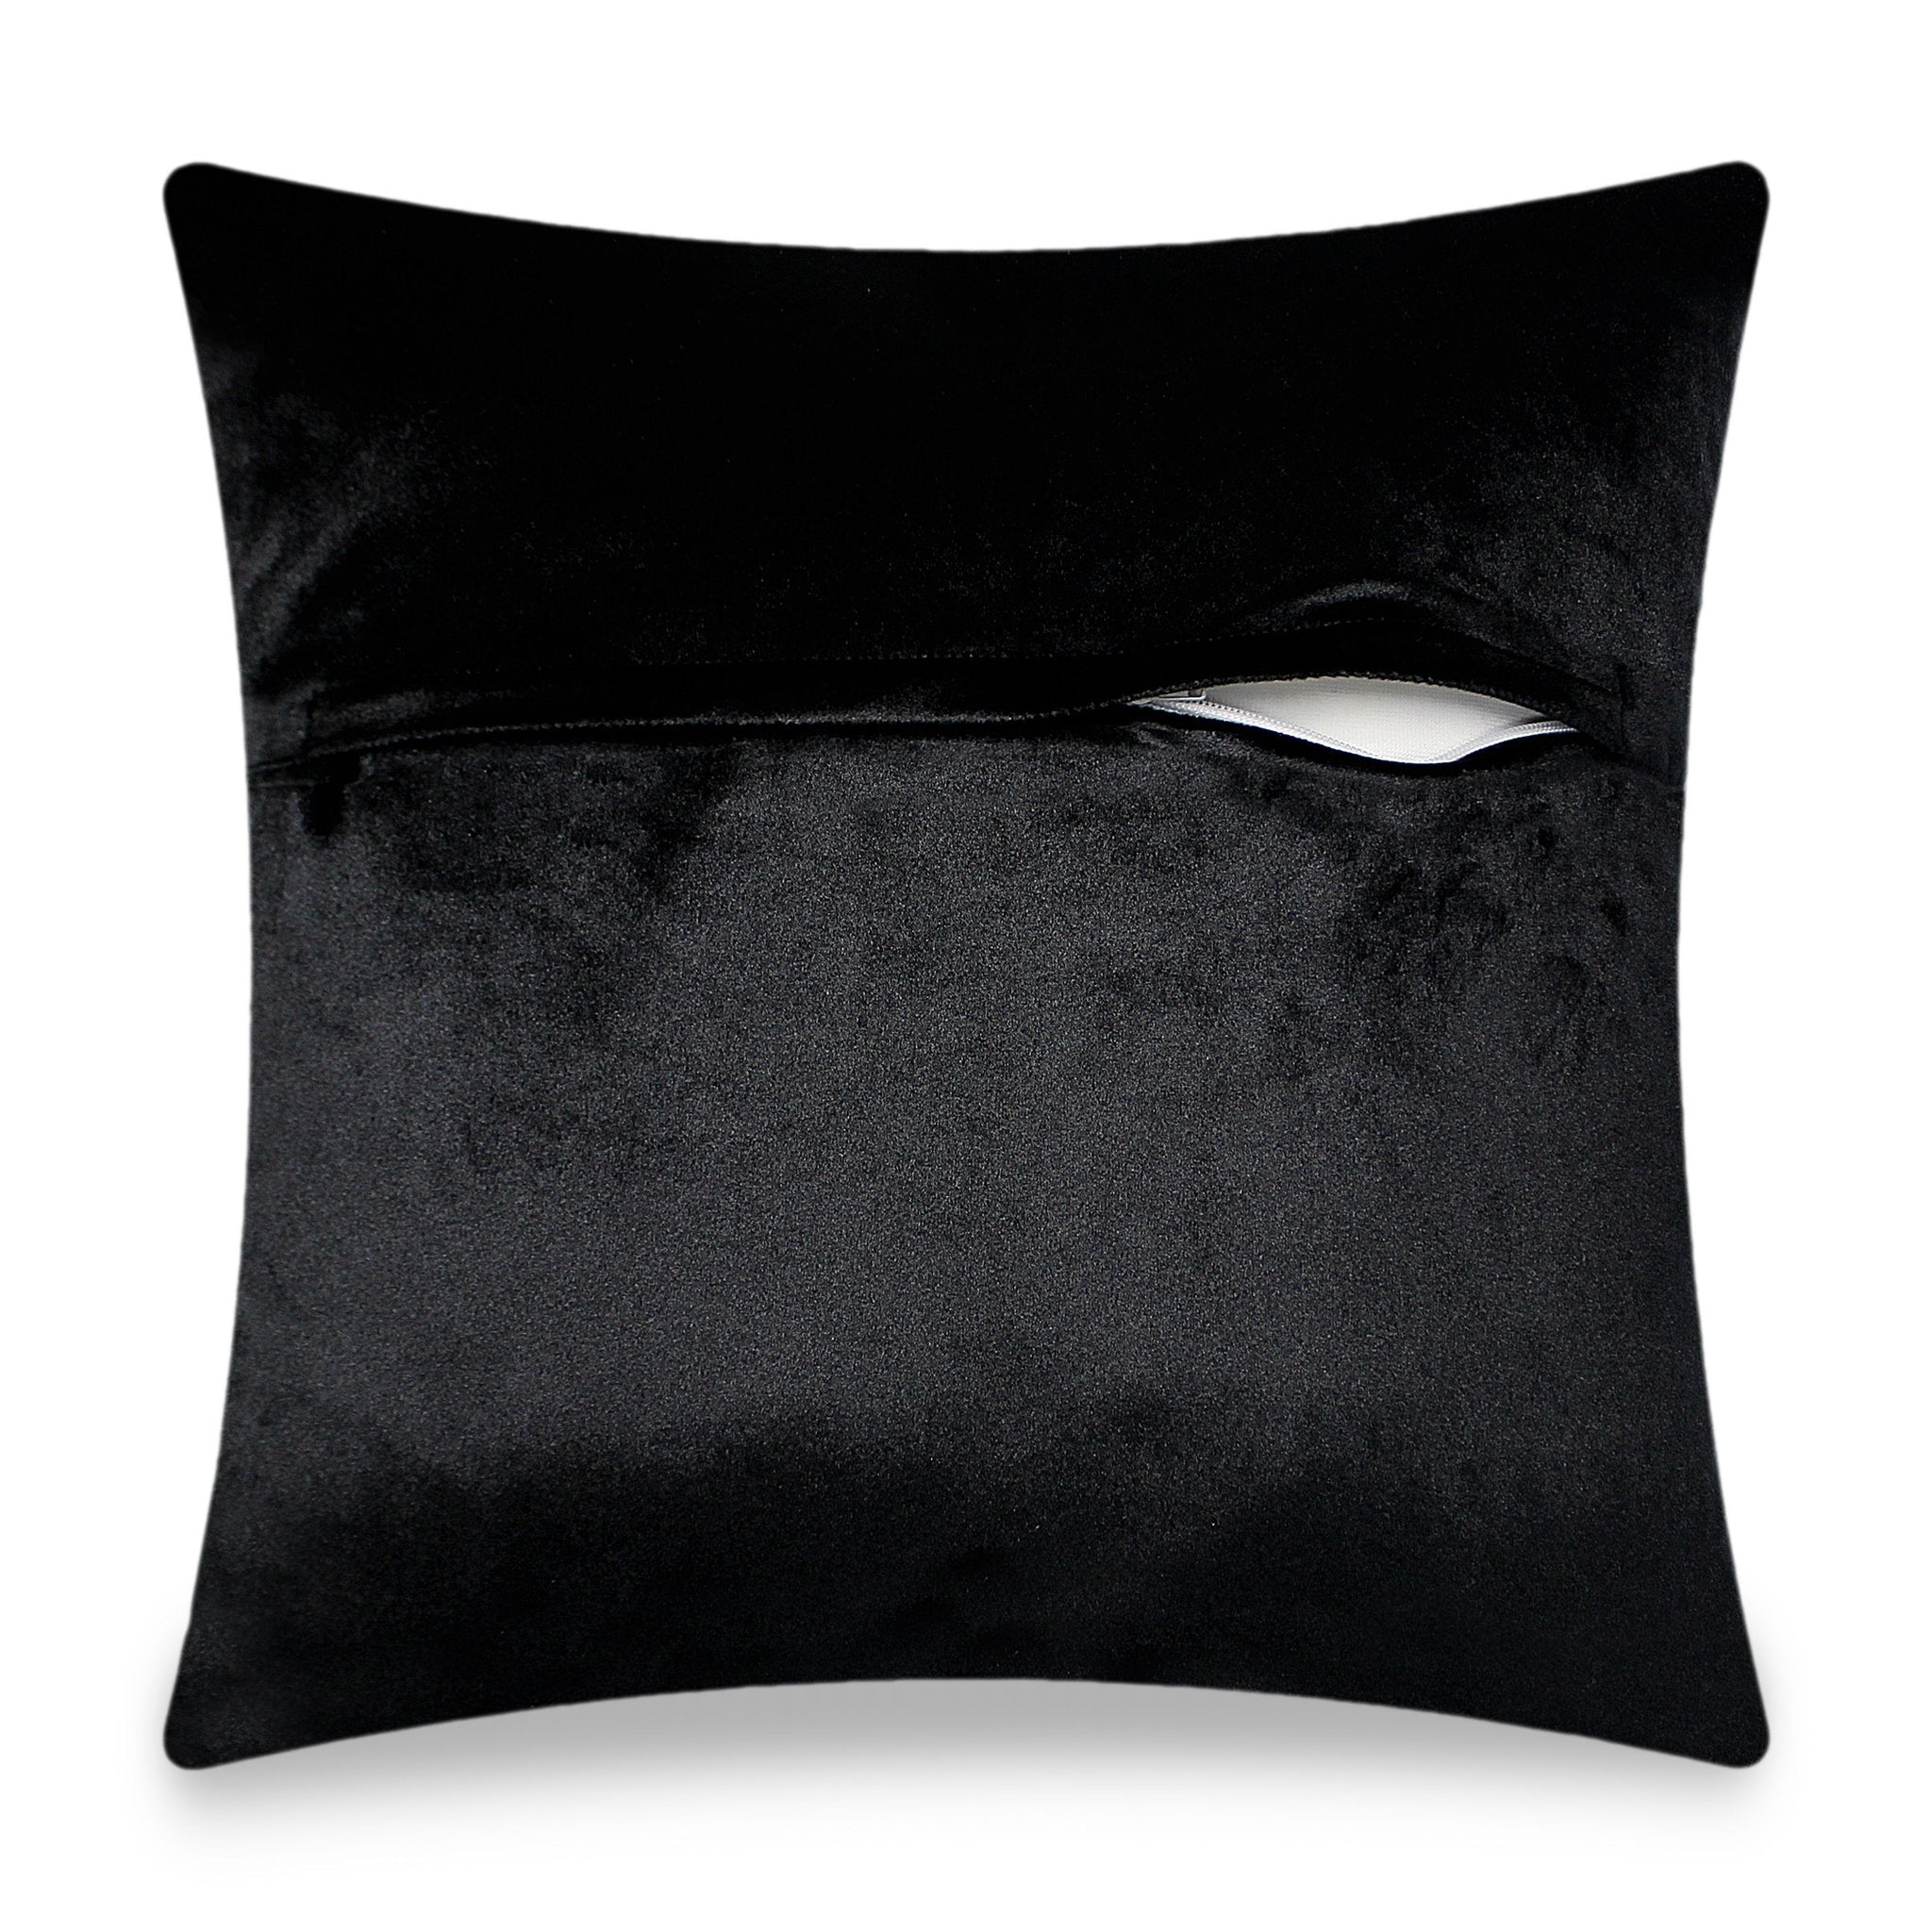 Black Velvet Cushion Cover Baroque Arch Decorative Pillowcase Home Decor Throw Pillow for Couch Sofa Chair Living Room 45x45 cm 18x18 In